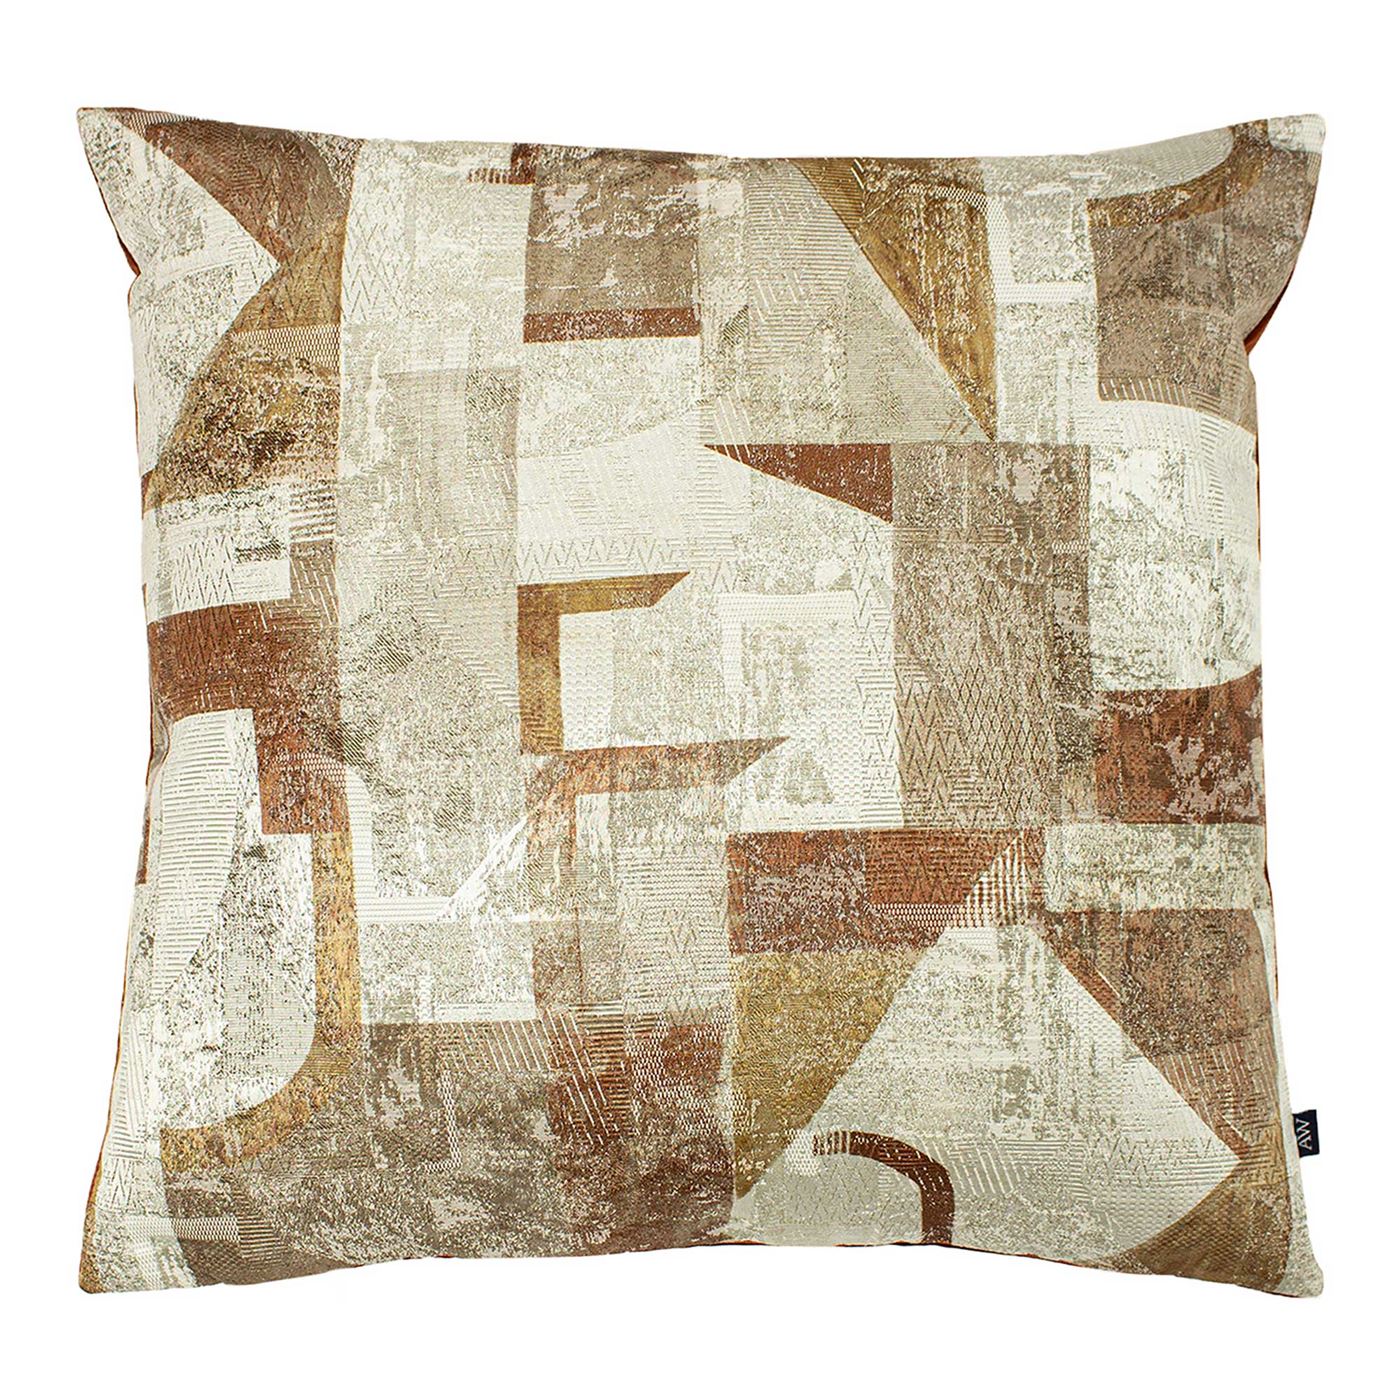 Terracotta Form Cushion, Square, Neutral | Barker & Stonehouse